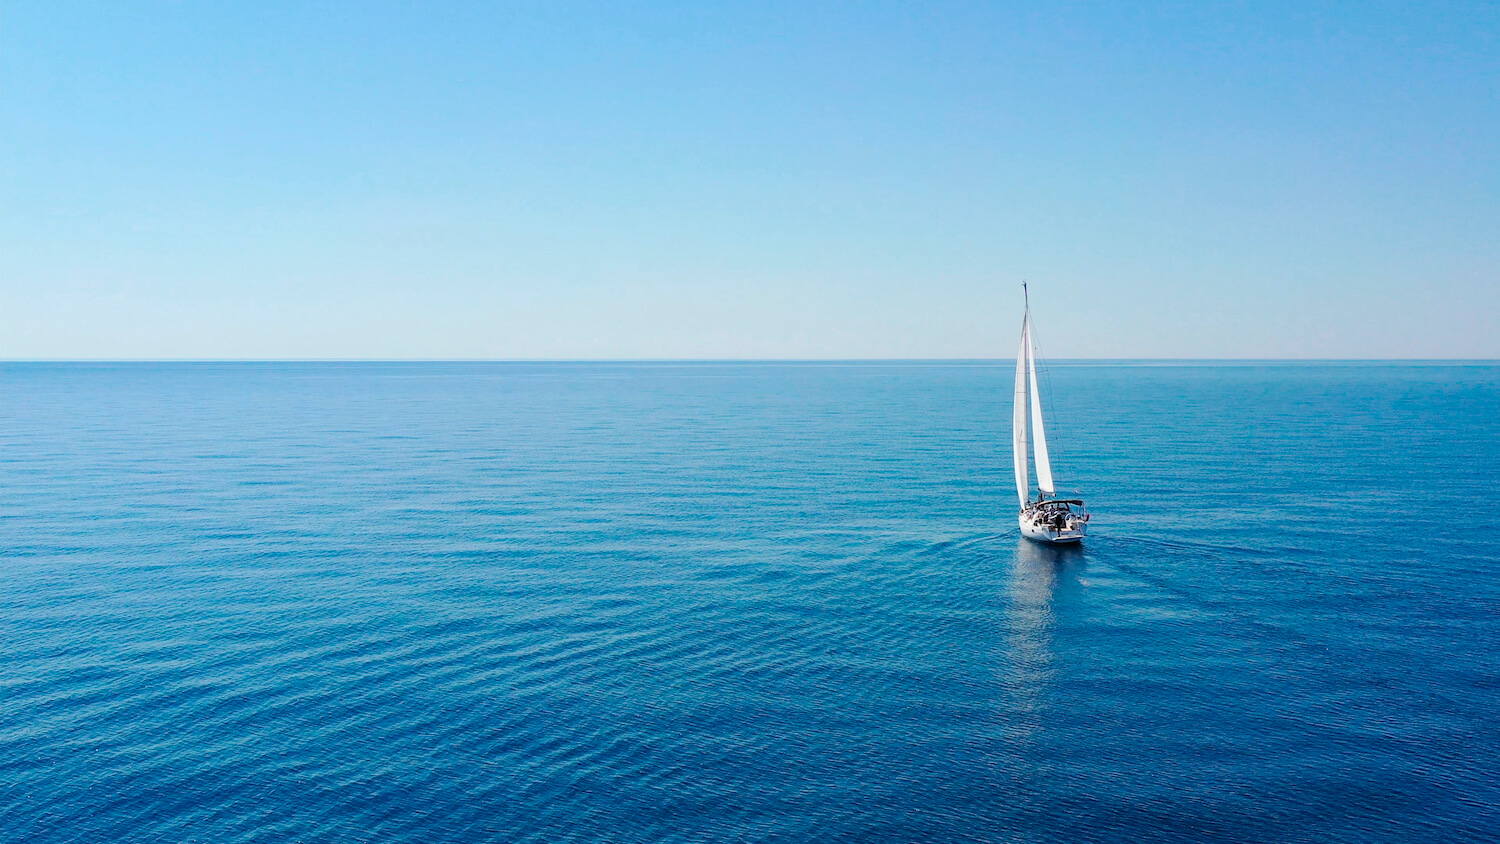 A calm sea with a sailing ship on it. 